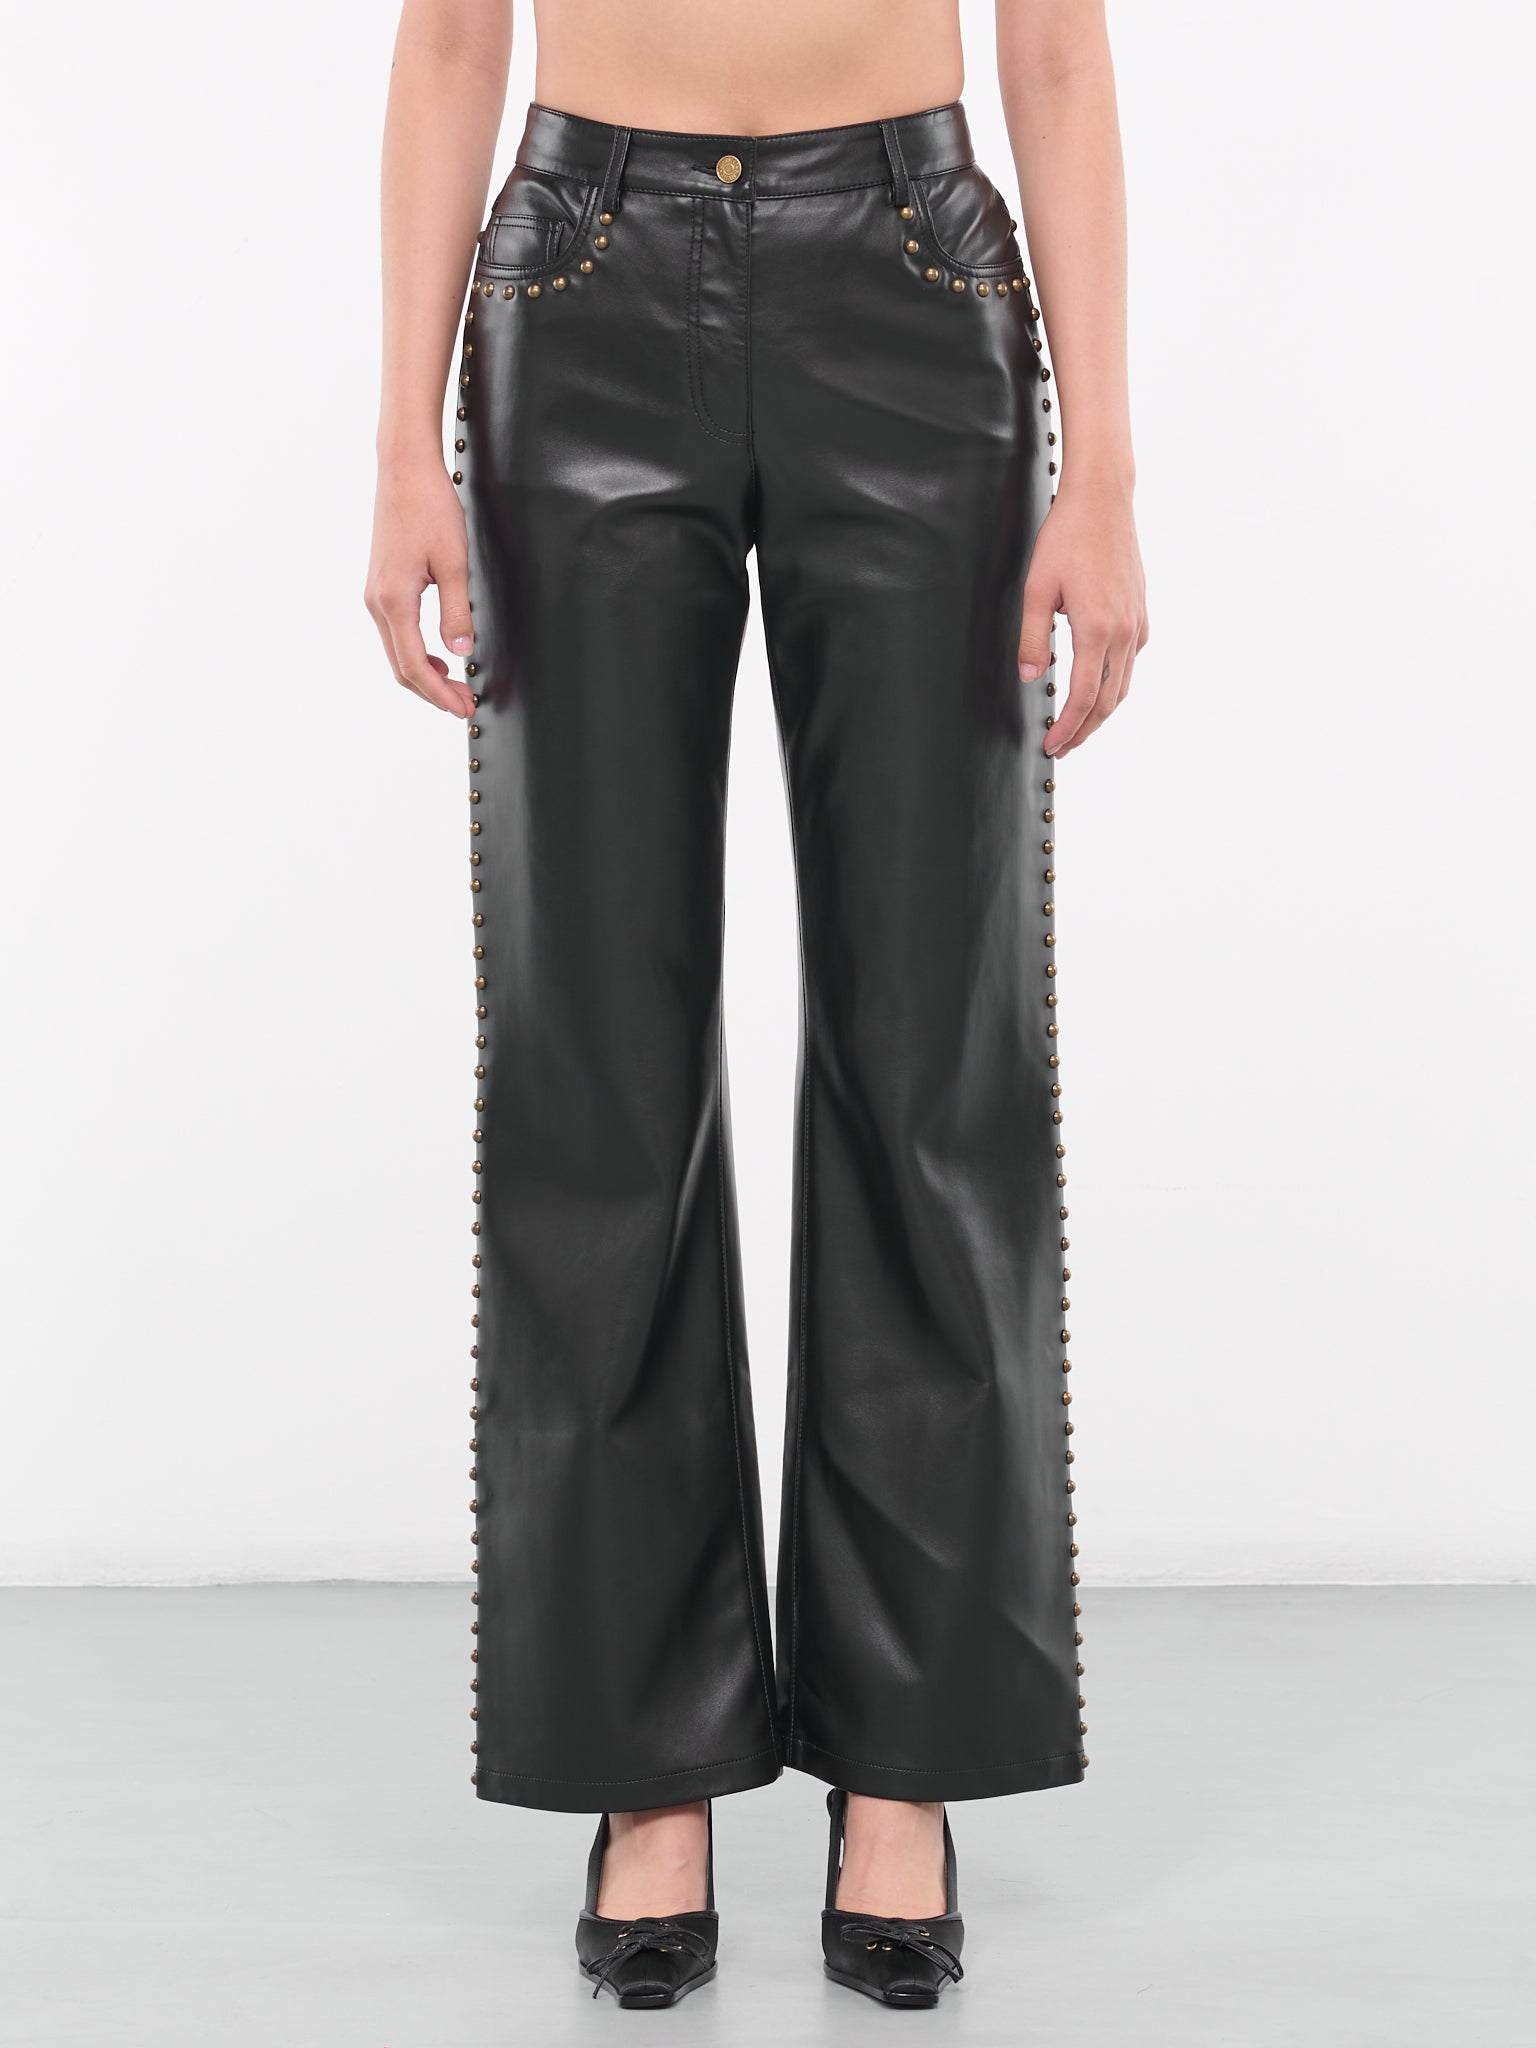 Studded Leather Pants (A0337-8718-BLACK)